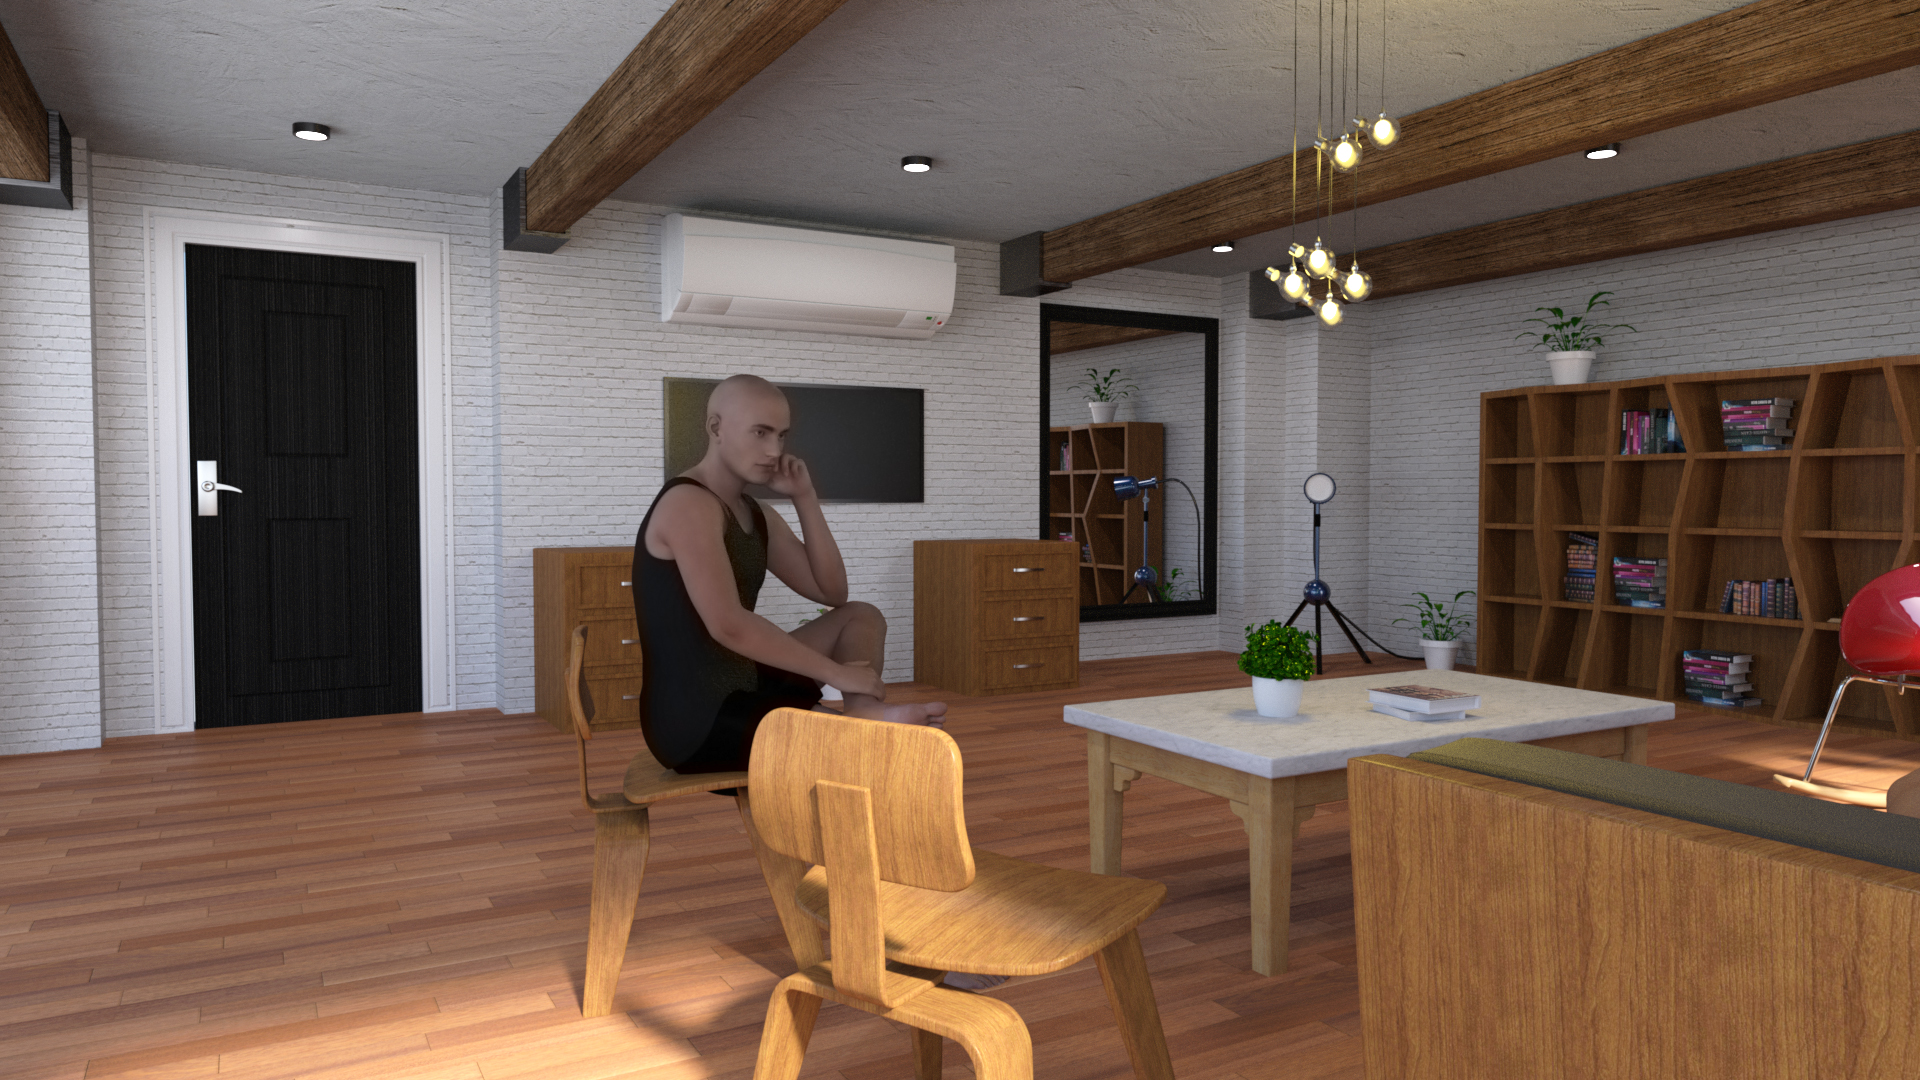 Manhattan Living Room by: Tesla3dCorp, 3D Models by Daz 3D